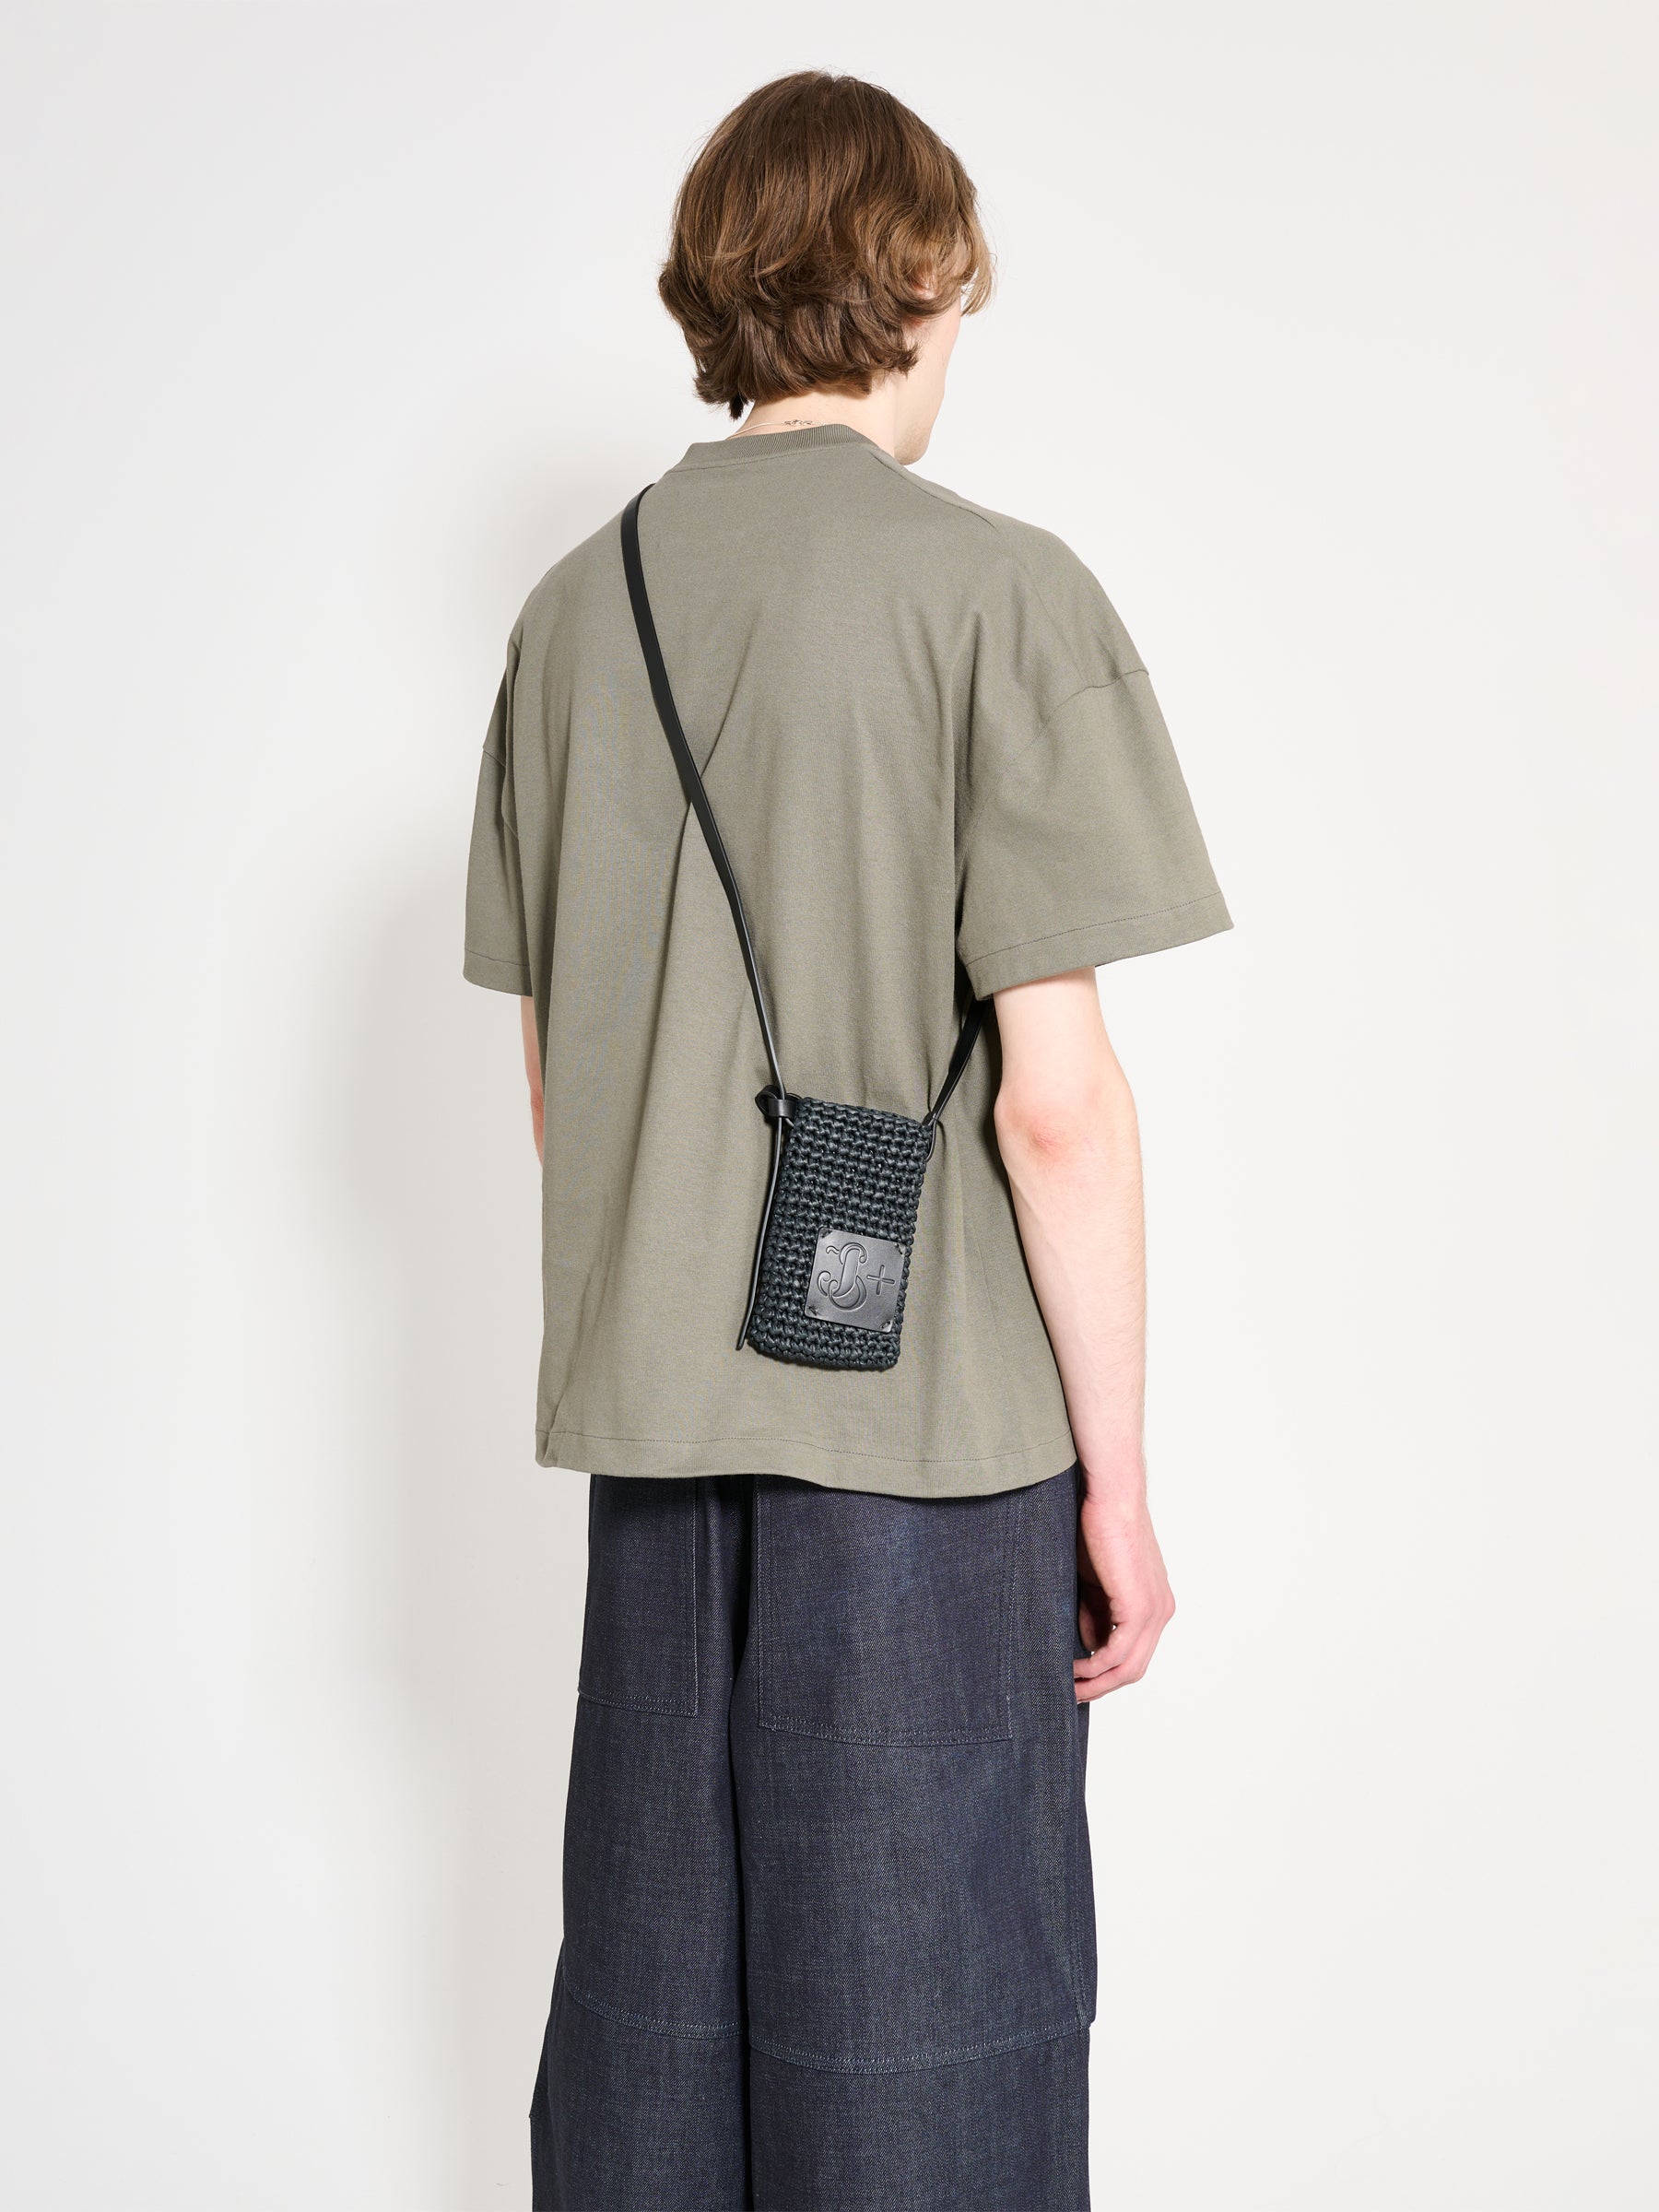 Jil Sander+ Crochet Phone Pocket Bag Black